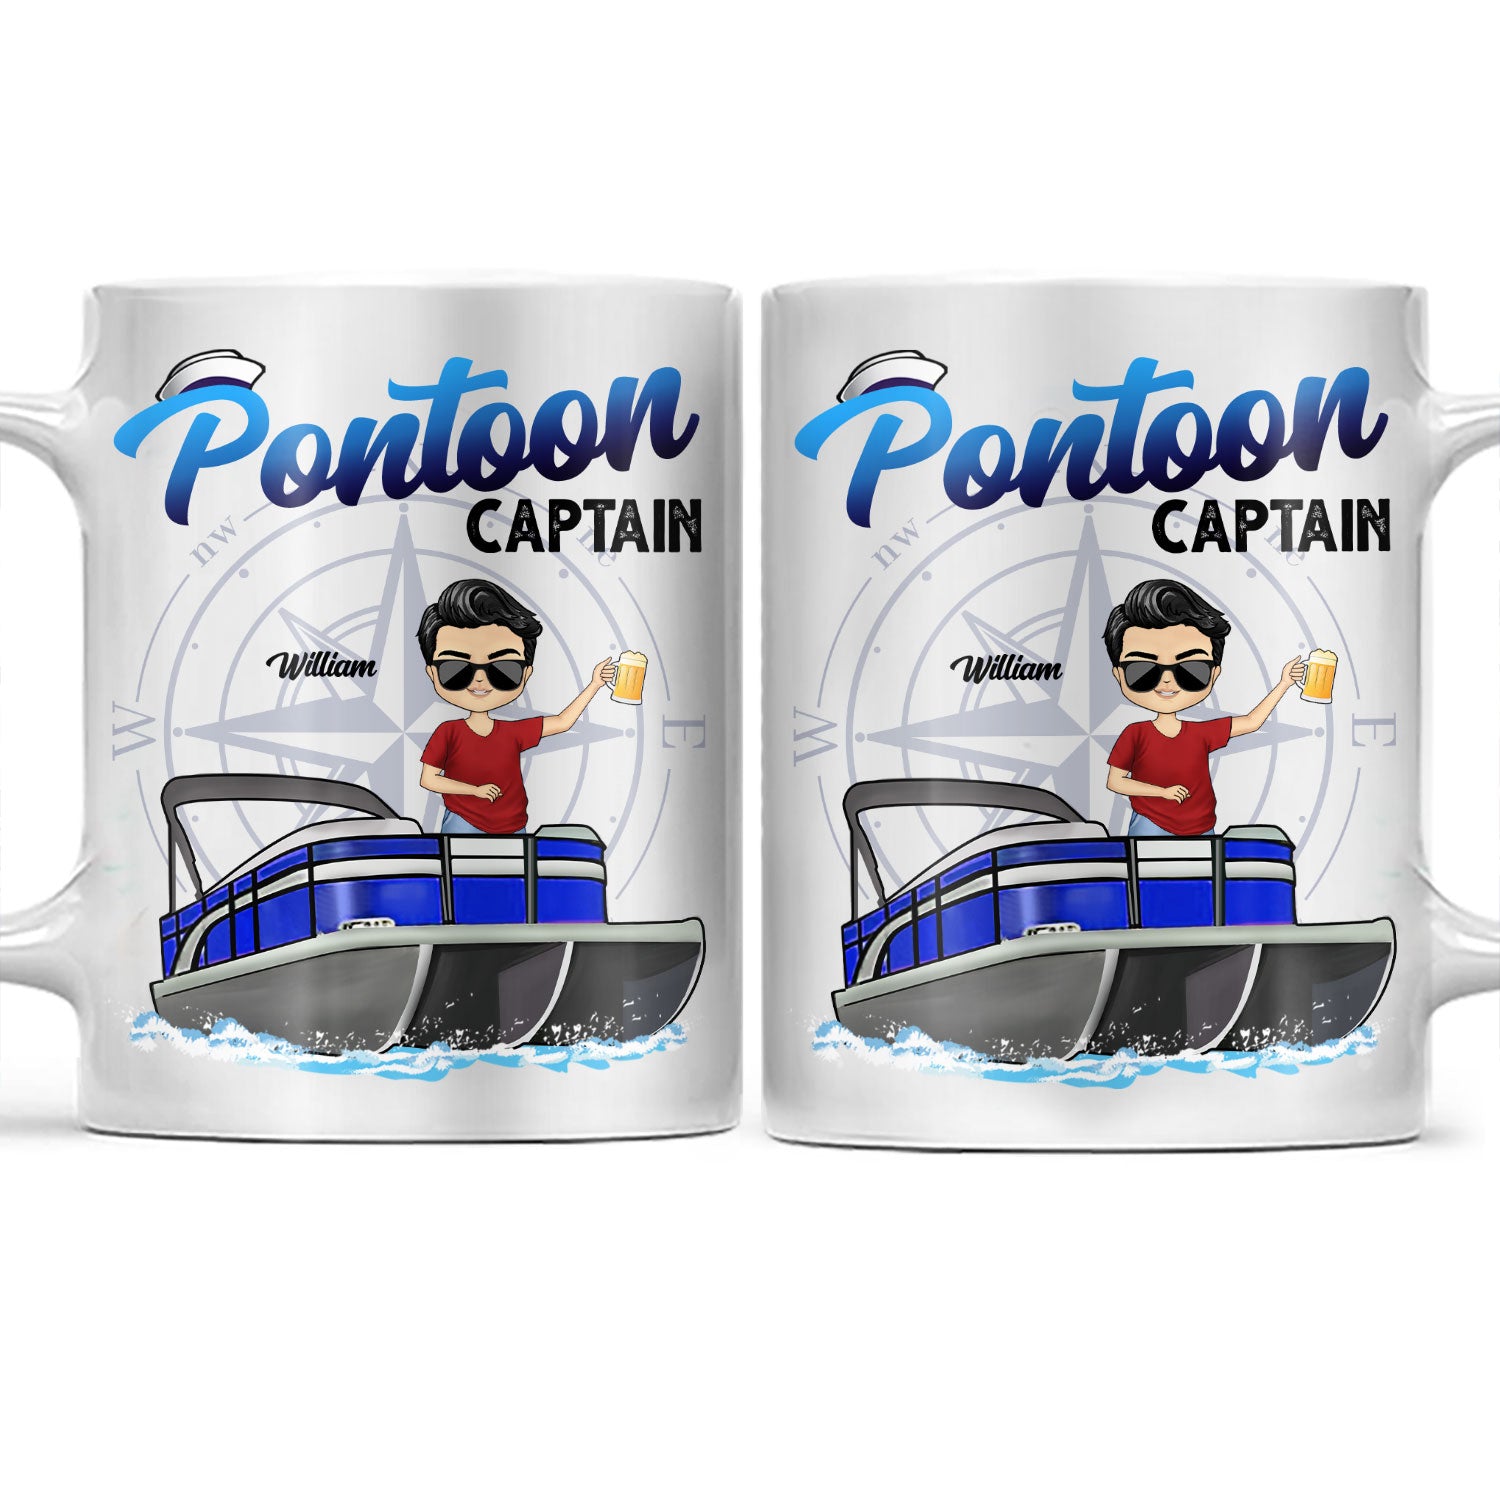 Boating Pontoon Captain - Birthday, Traveling, Cruising Gift For Pontooning Lovers, Beach Lovers, Travelers - Personalized Custom White Edge-to-Edge Mug